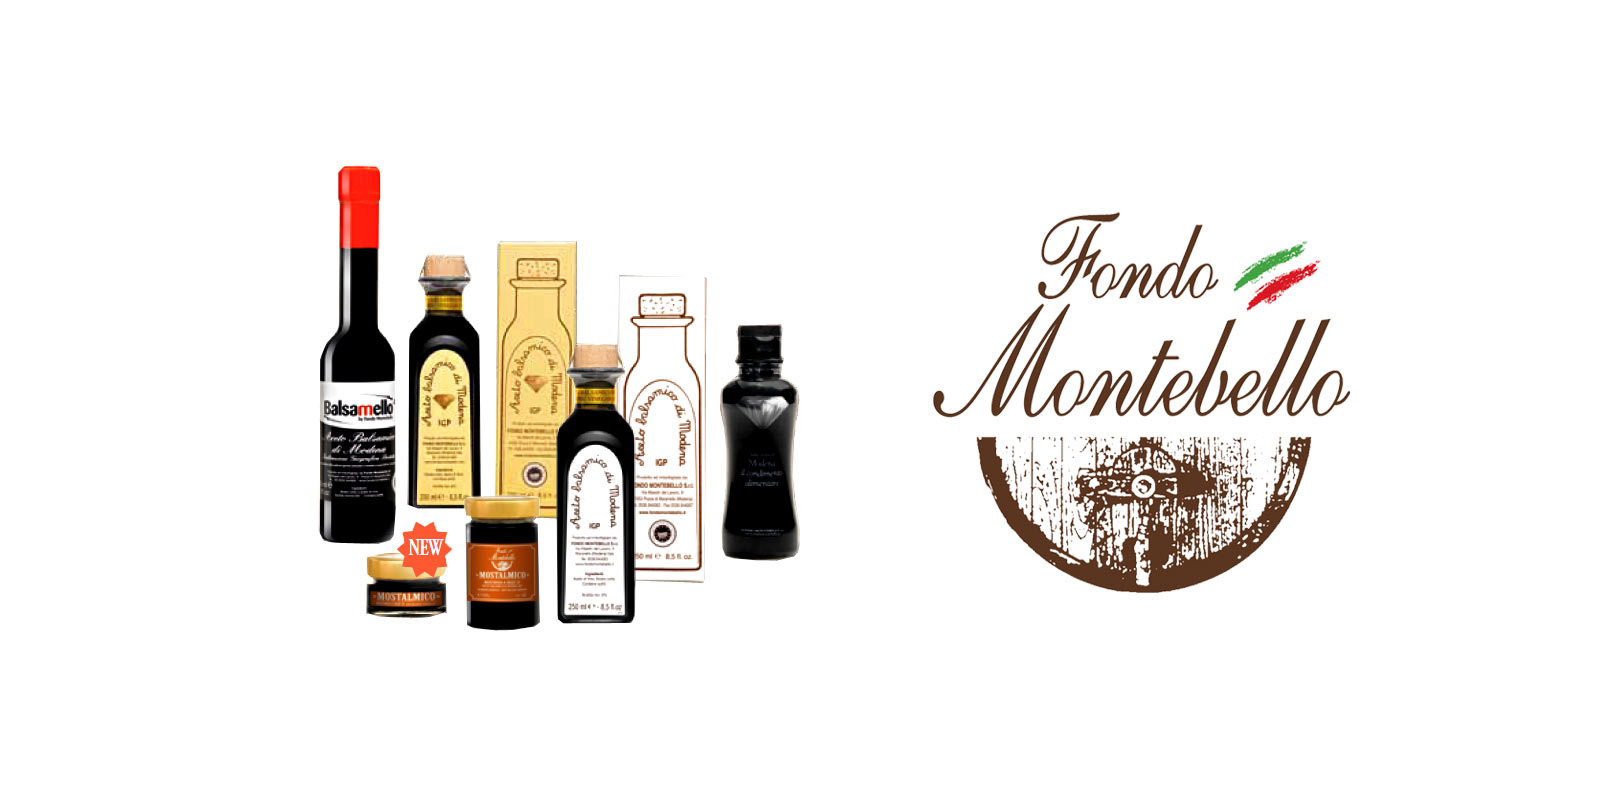 Aceto Balsamico Fondo Montebello Fondo Montebello menggunakan kaedah pengeluaran kuno dan tradisional untuk menghasilkan cuka balsamic yang sangat baik dari wilayah Maranello di Itali.